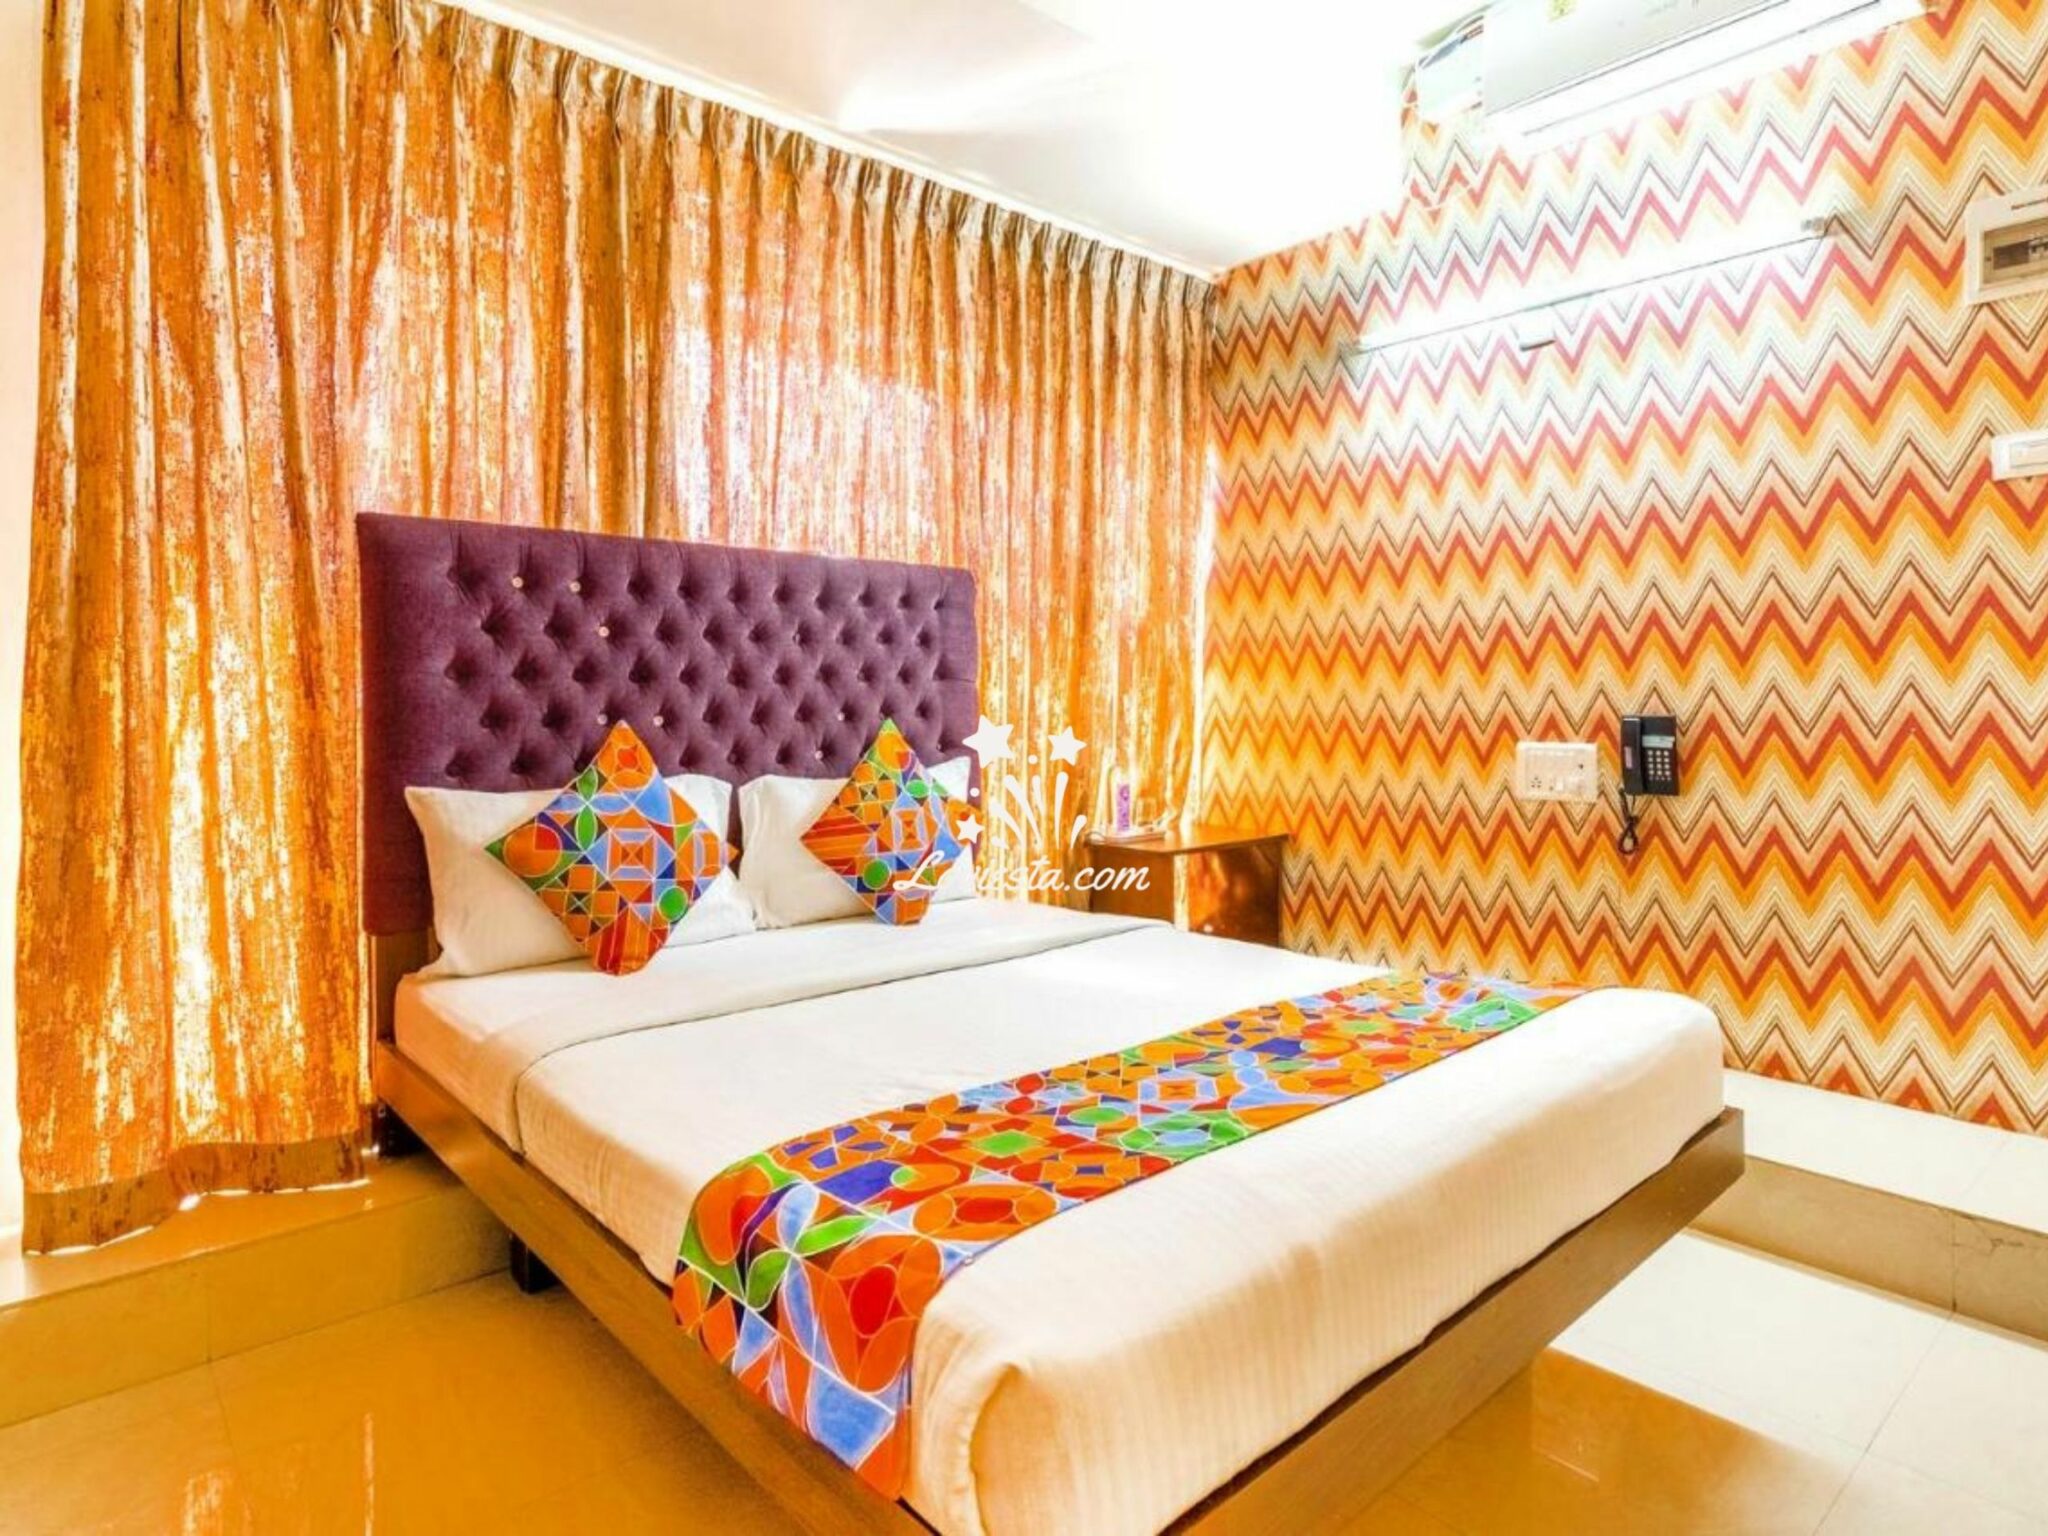 Premium Hotel Room Stay With Decorations In Bangalore - Loviesta